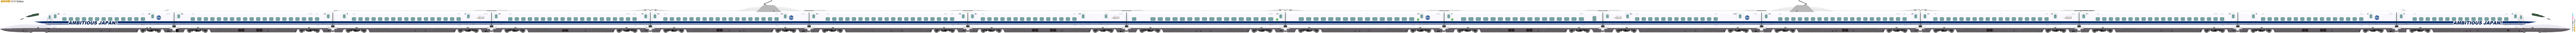 9011 - [9011] Central Japan Railway 52287923564_bdf517e8bf_o